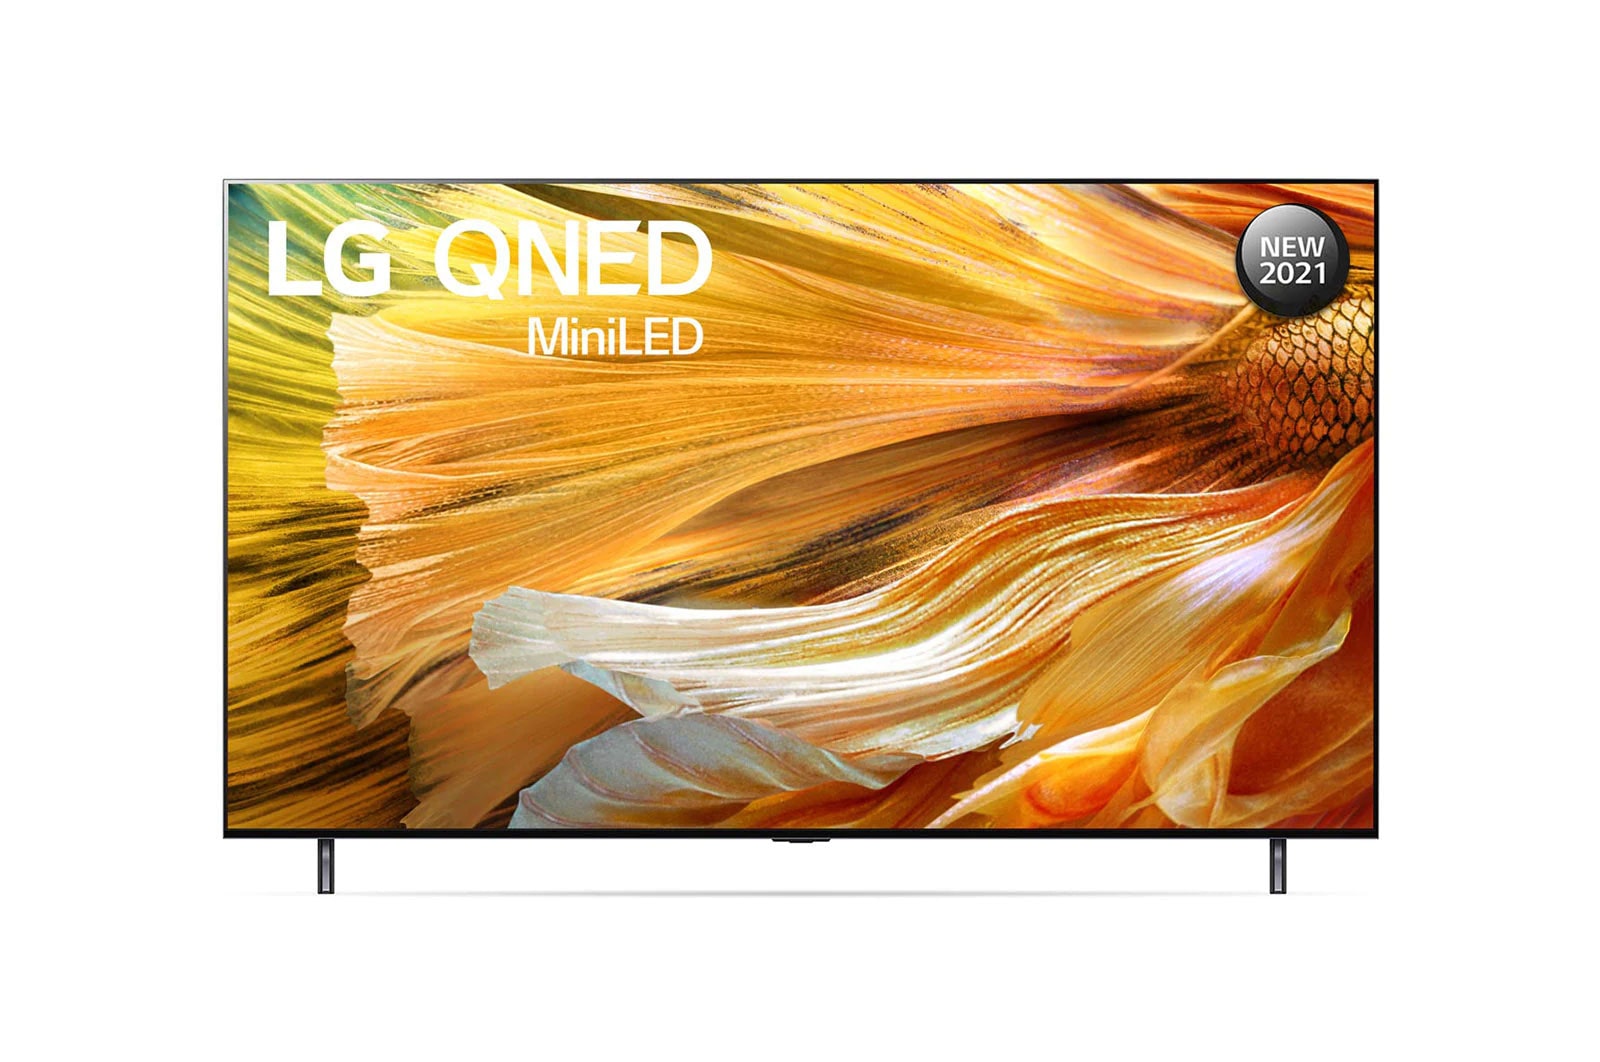 LG QNED TV 75 Inch QNED90 Series, Cinema Screen Design 4K Cinema HDR WebOS Smart ThinQ AI Mini LED